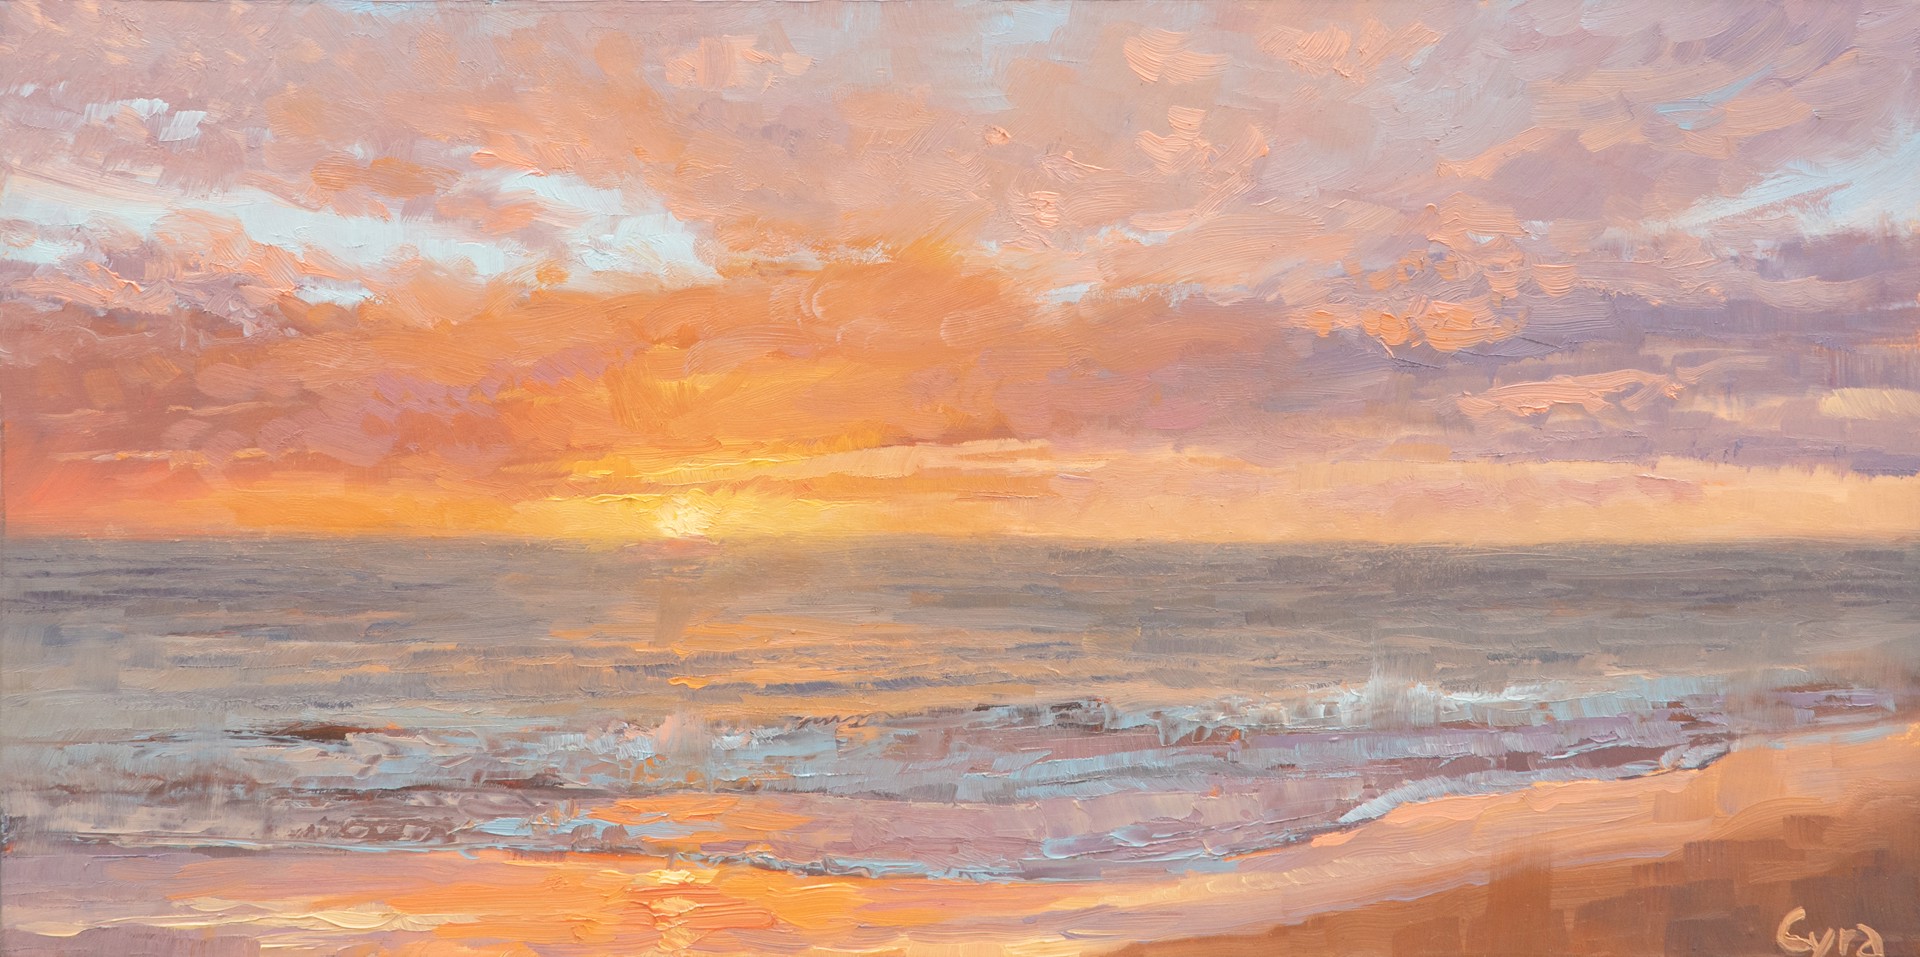 Seaside Sunrise by Michael Cyra